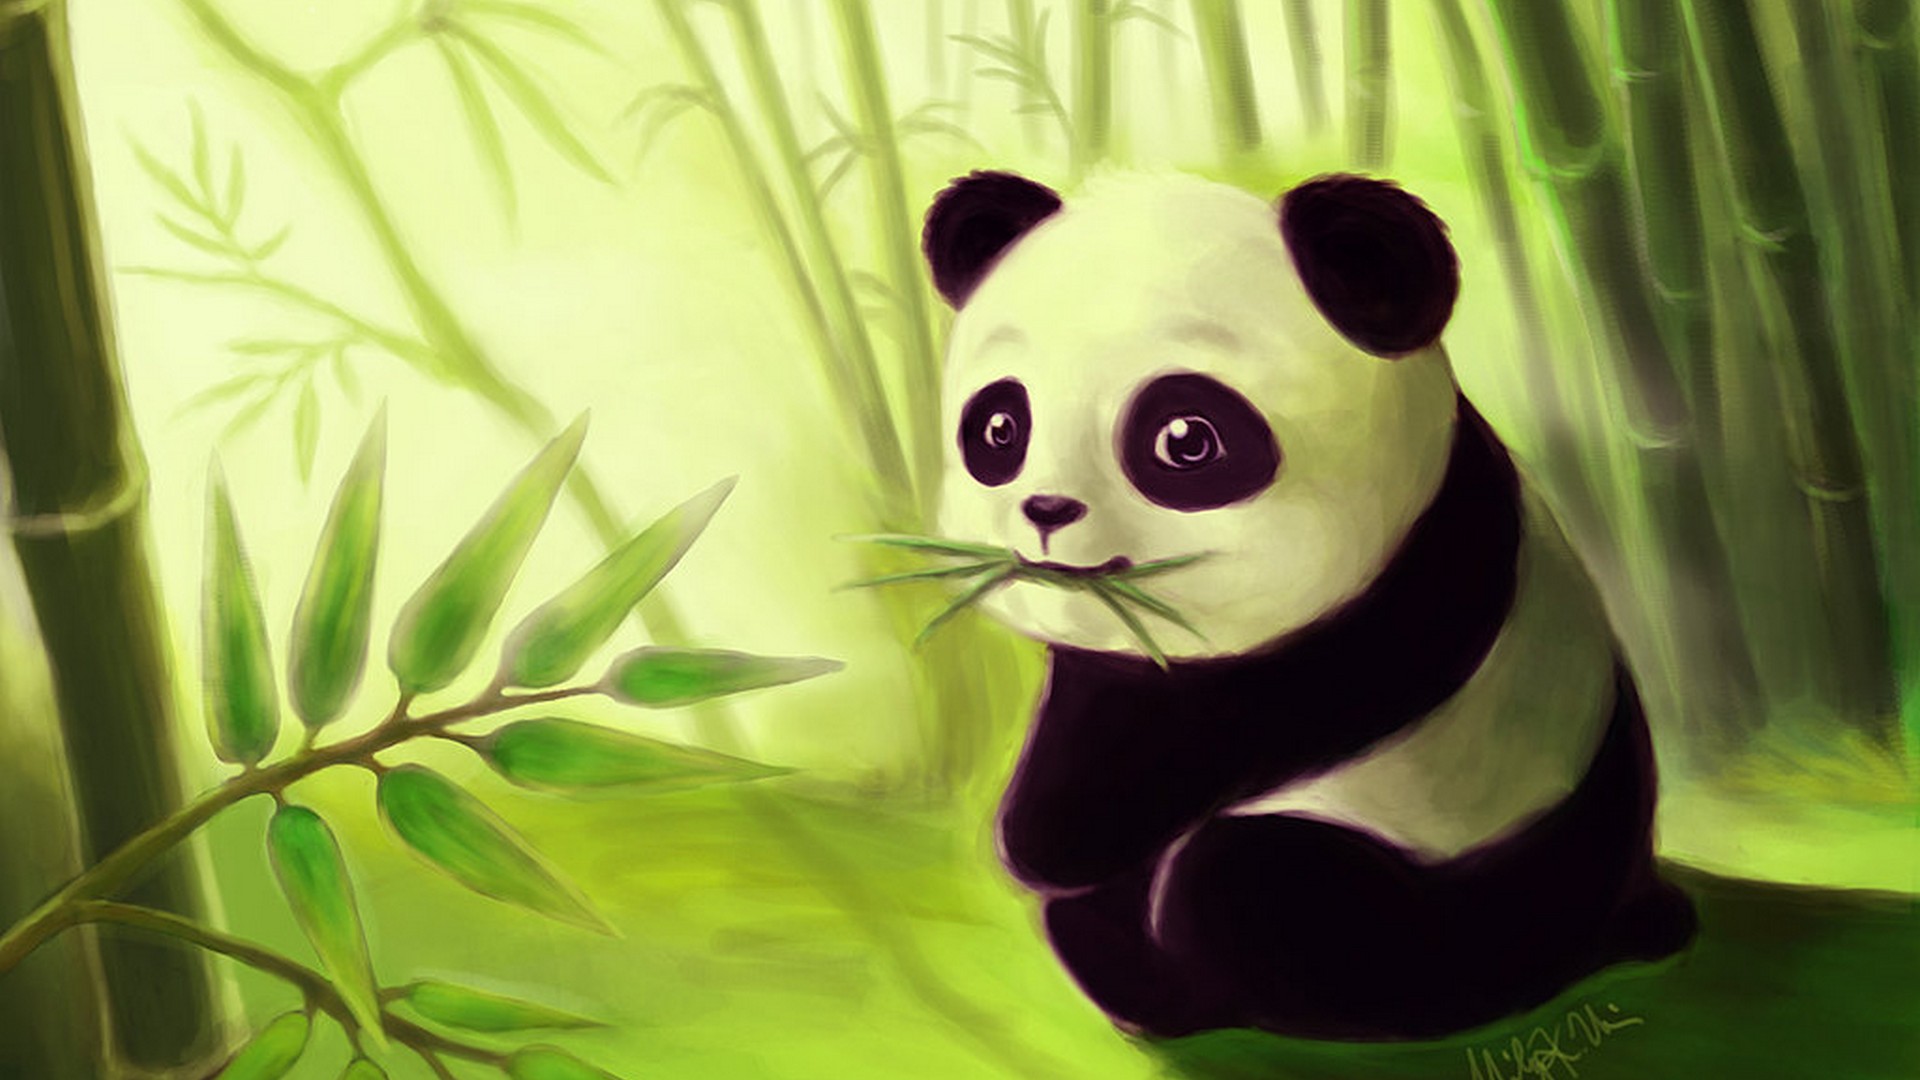 Animated Wallpaper Cute Panda - Panda Hd Wallpaper Animated - 1920x1080  Wallpaper 